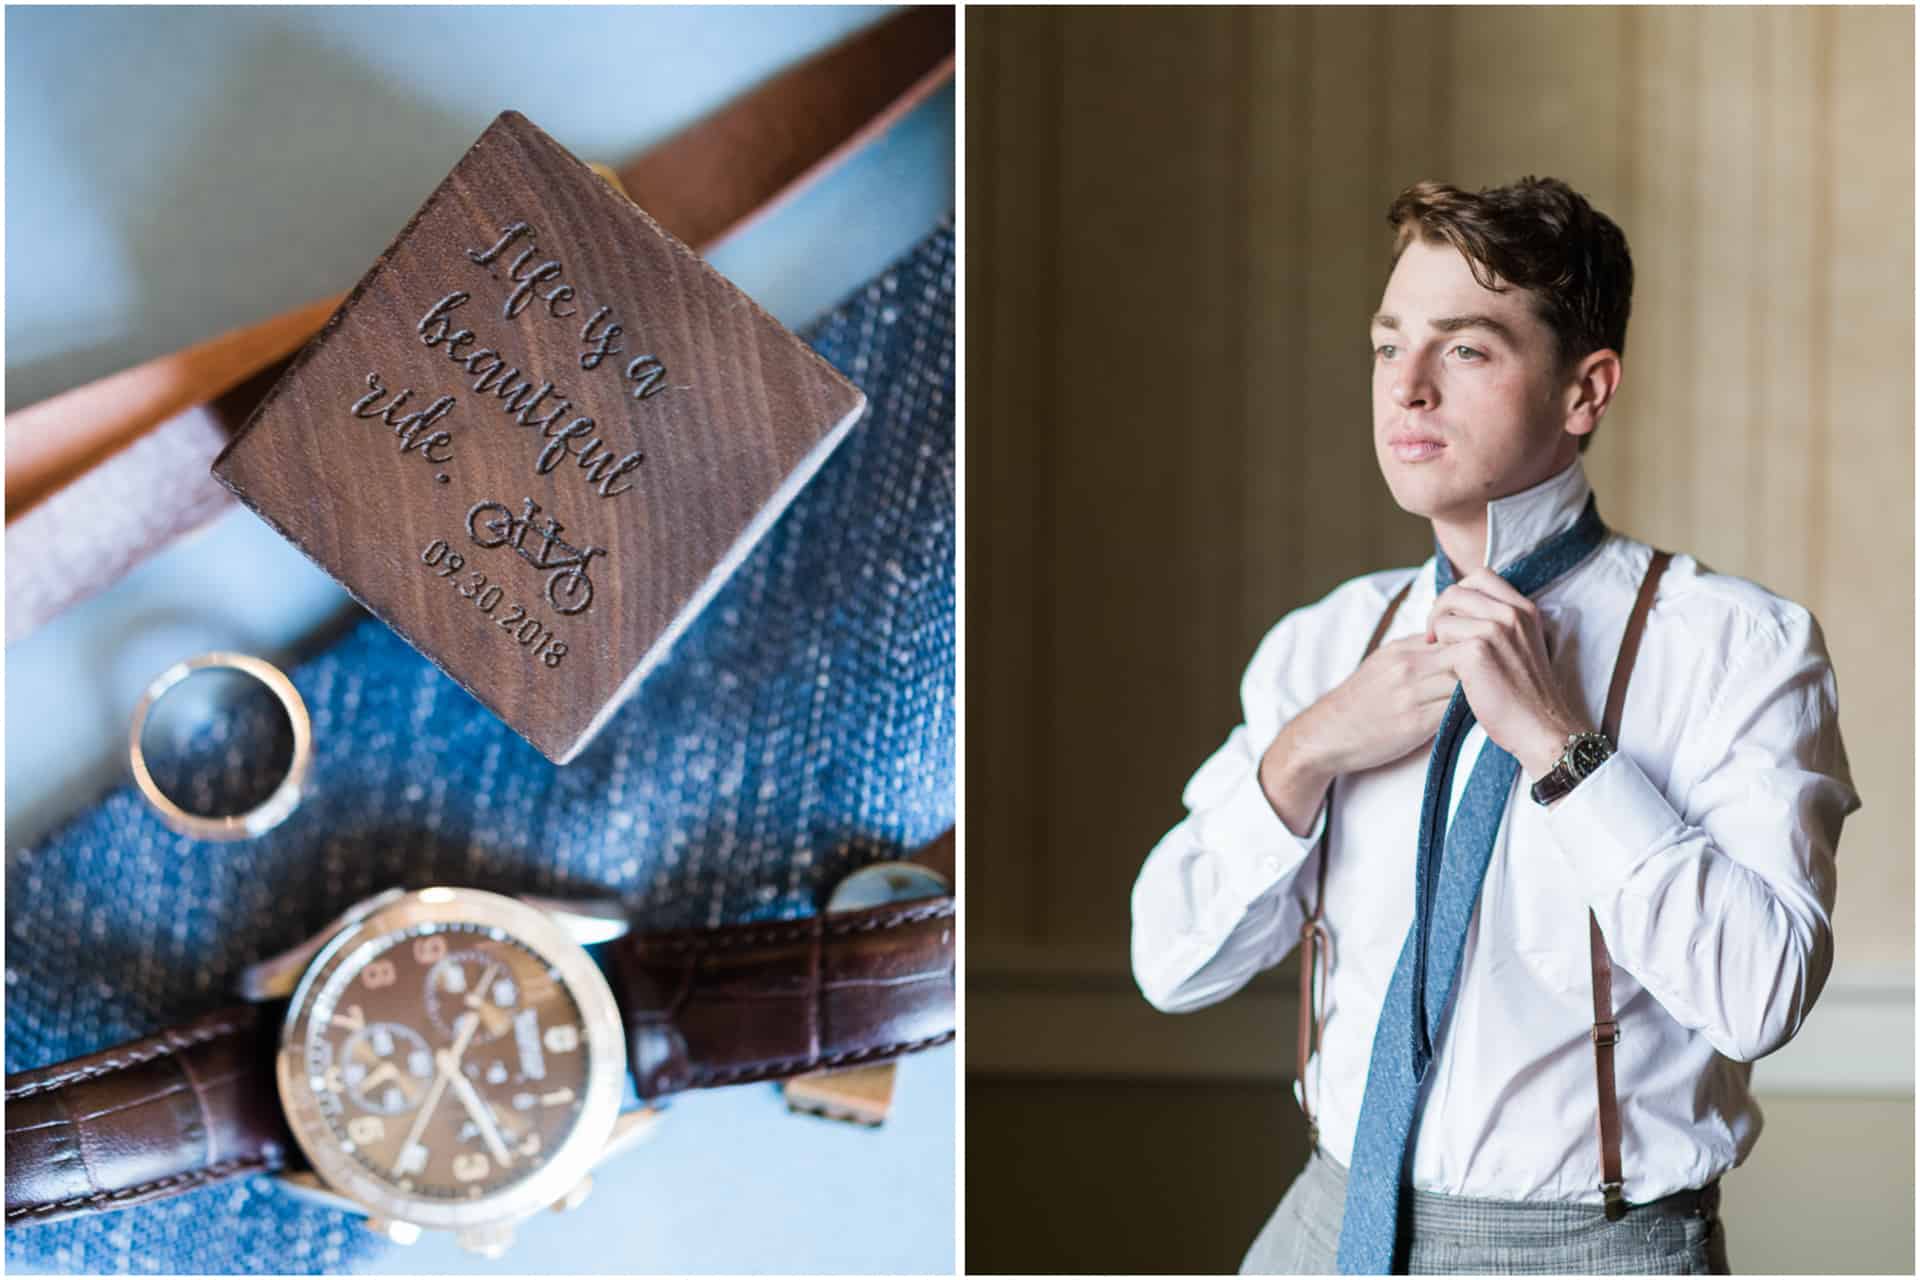 grooms blue details wooden ring box brown watch - getting ready indoor adjusting tie